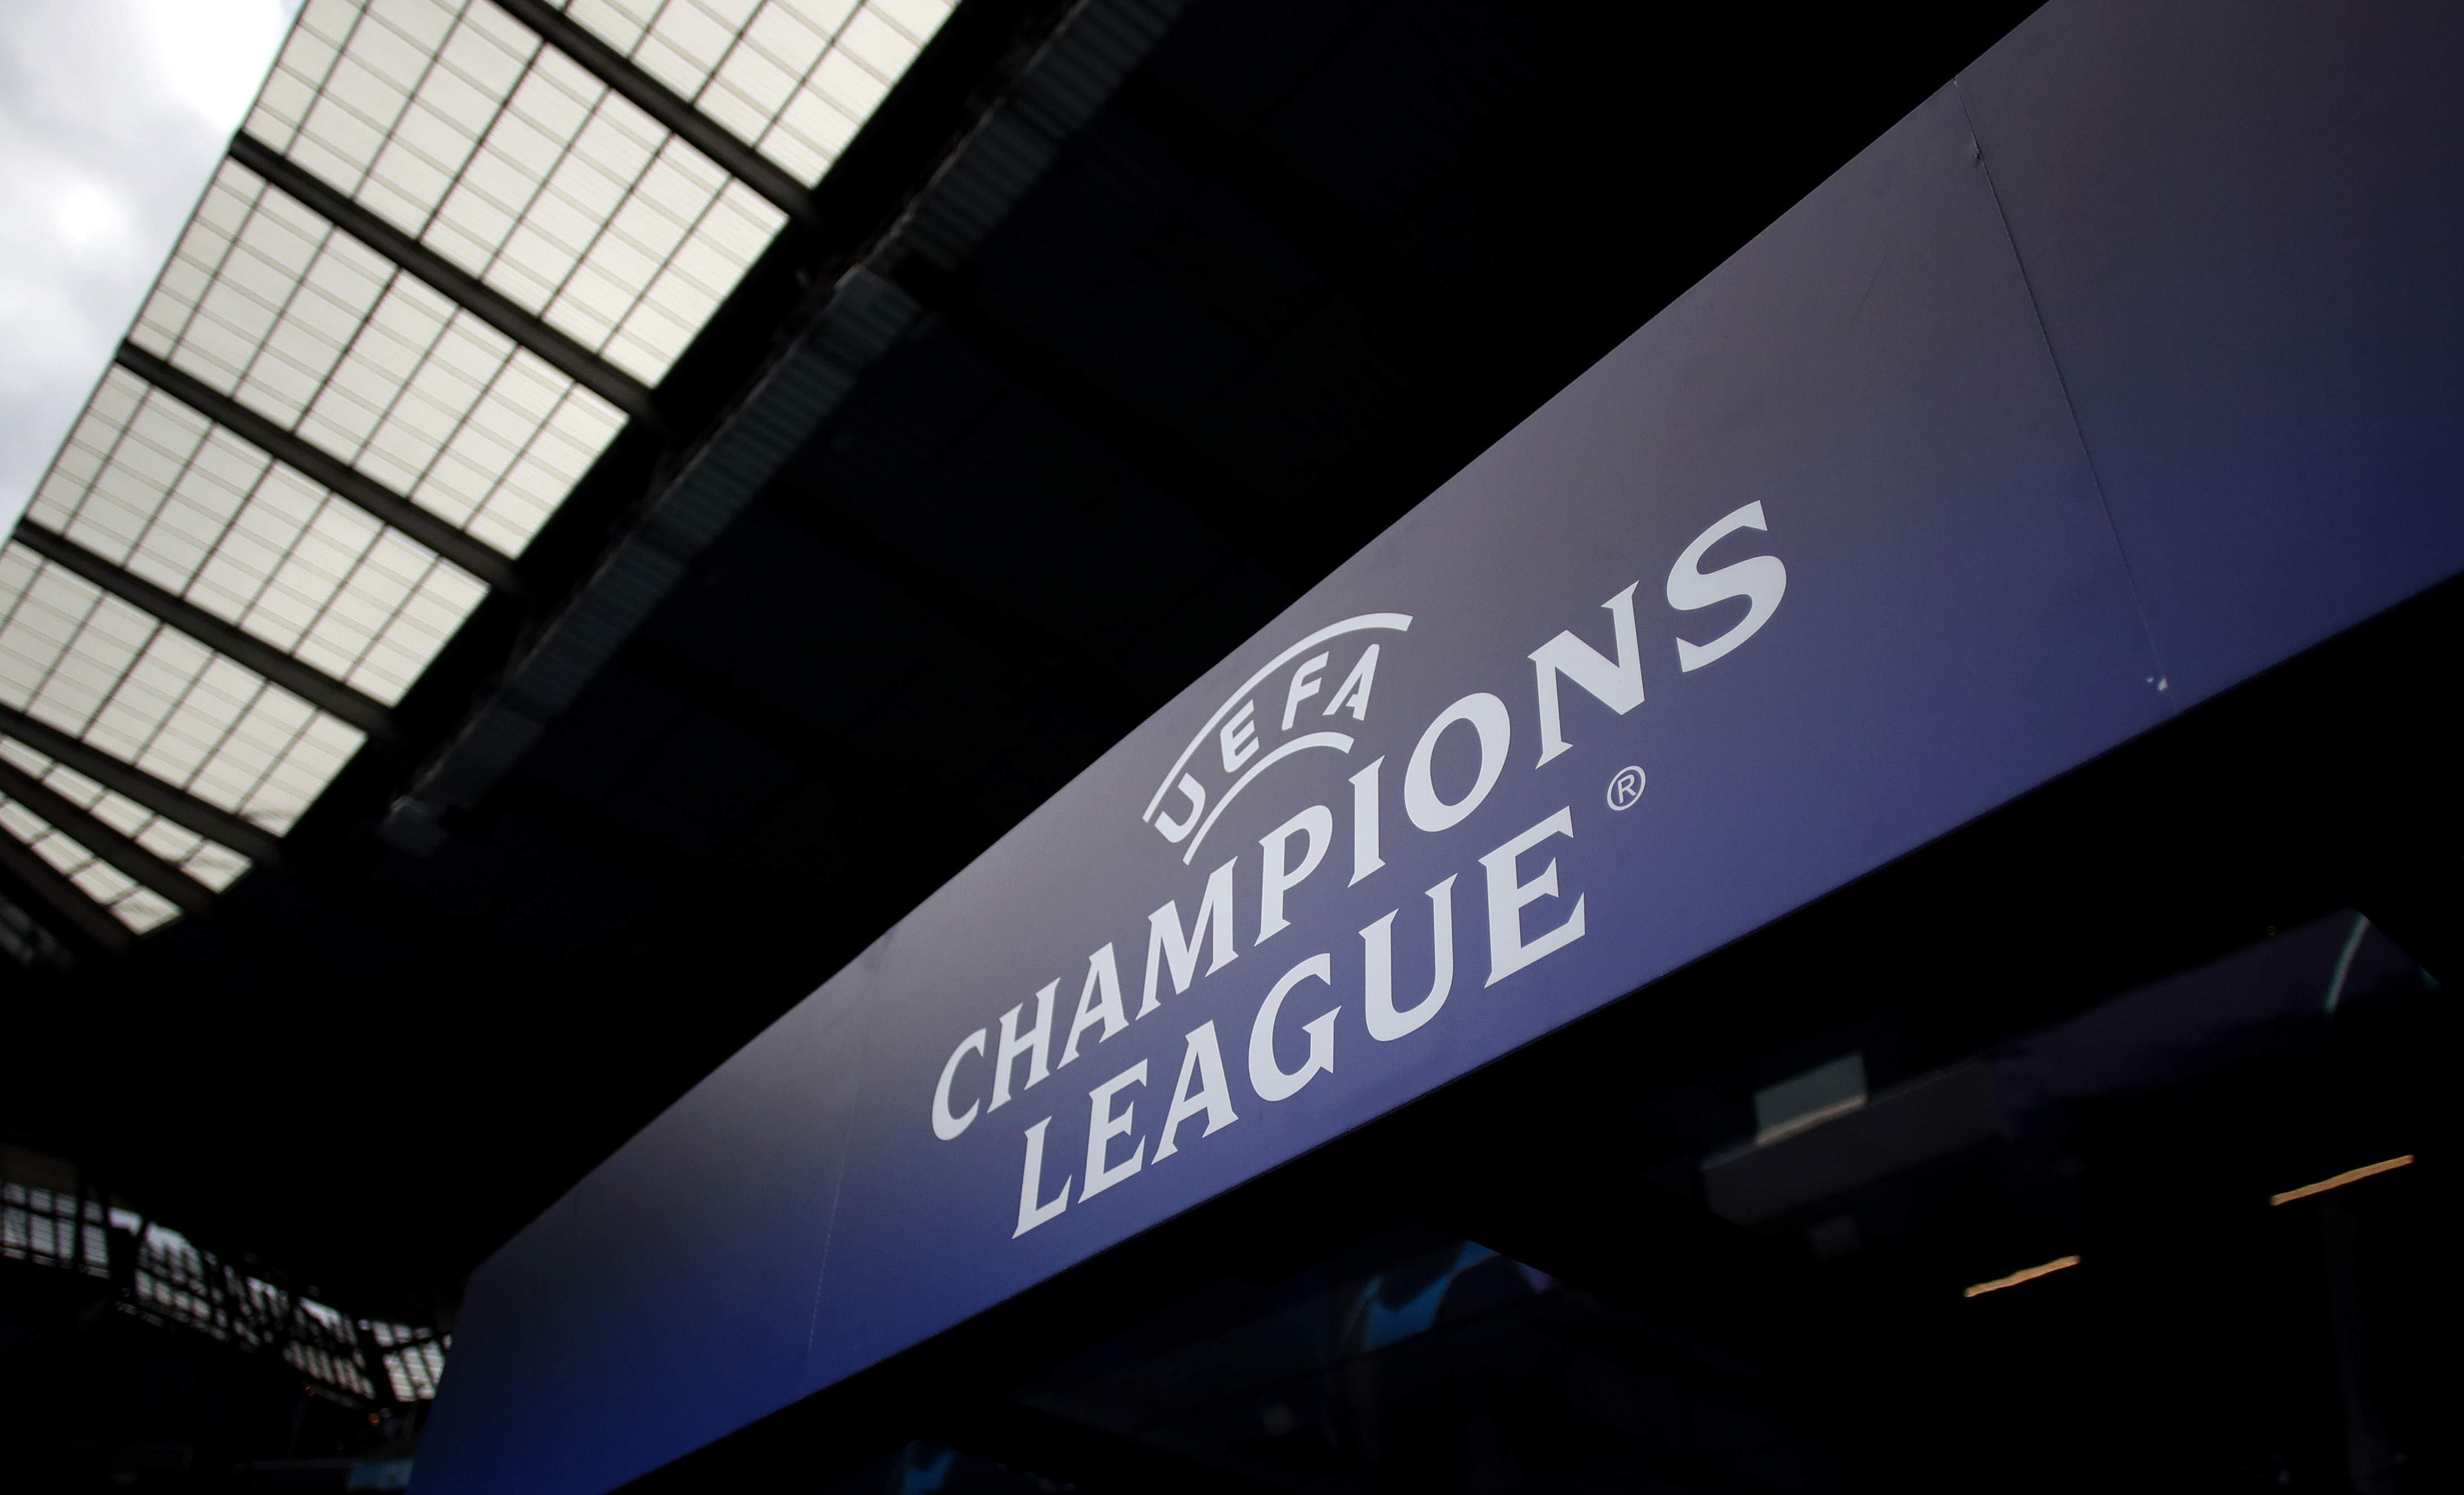 Manchester City v Real Madrid Semi Final Leg One - UEFA Champions League